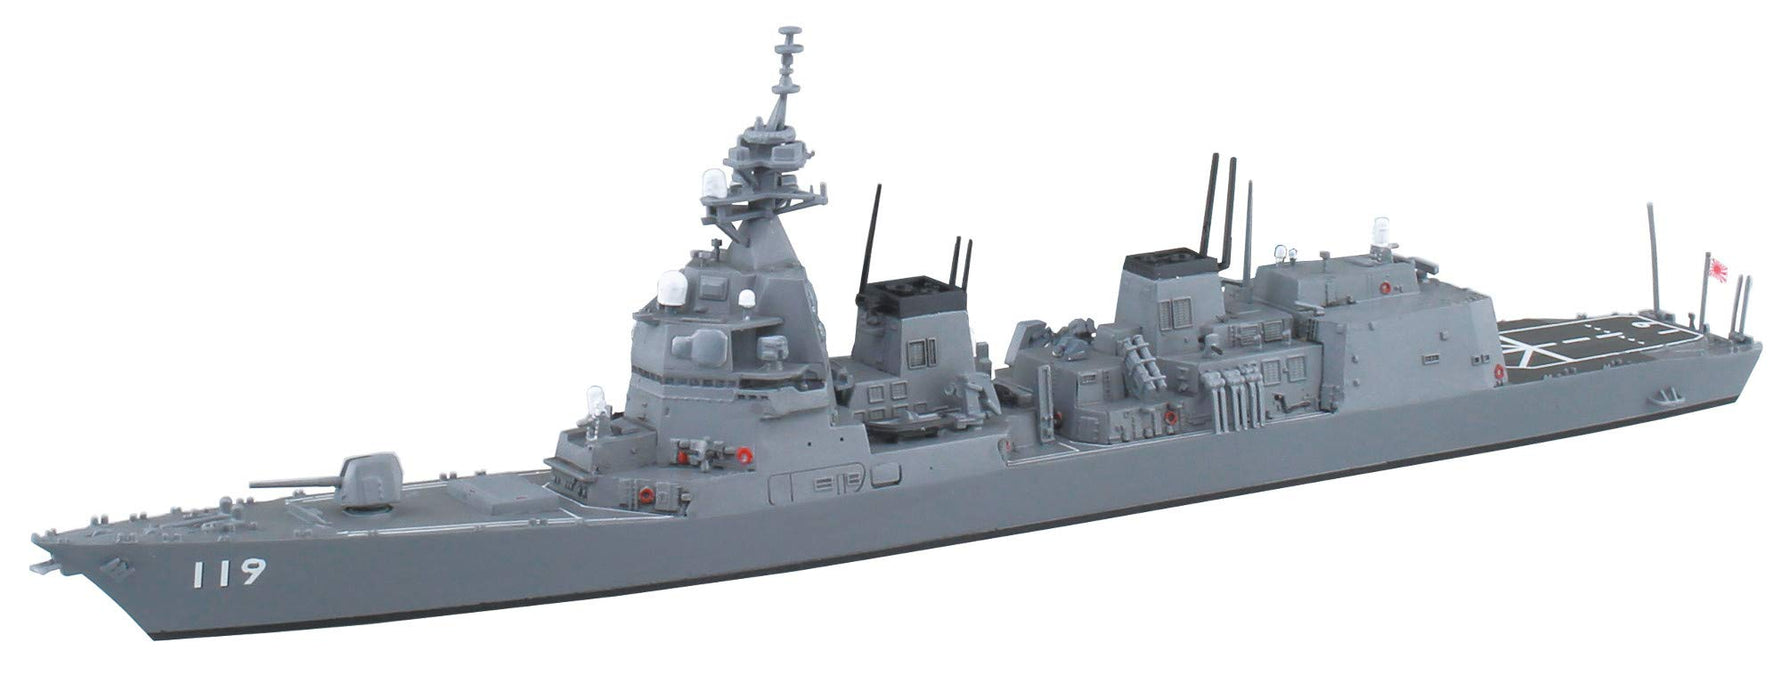 AOSHIMA Waterline 1/700 Jmsdf Defense Destroyer Asahi Dd-119 Plastic Model